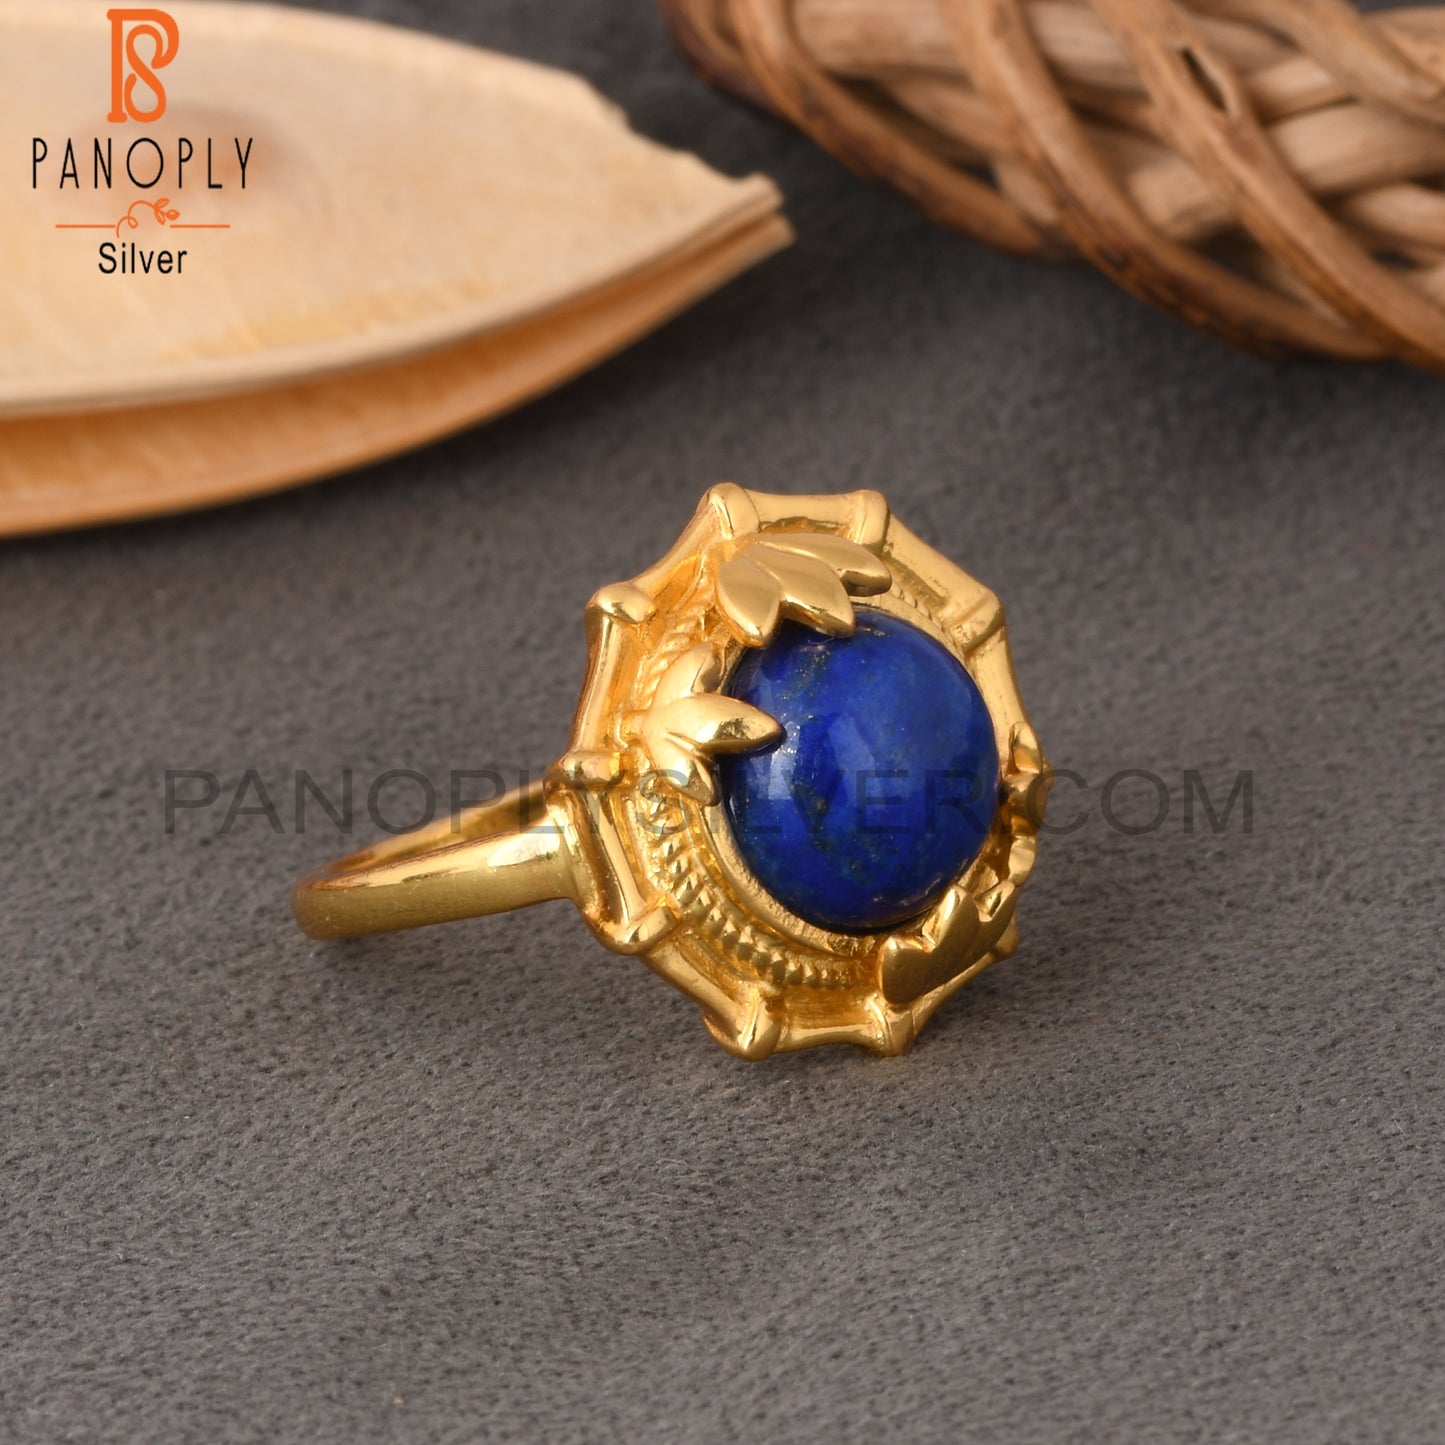 Lapis Lazuli Round 925 Sterling Silver Ring